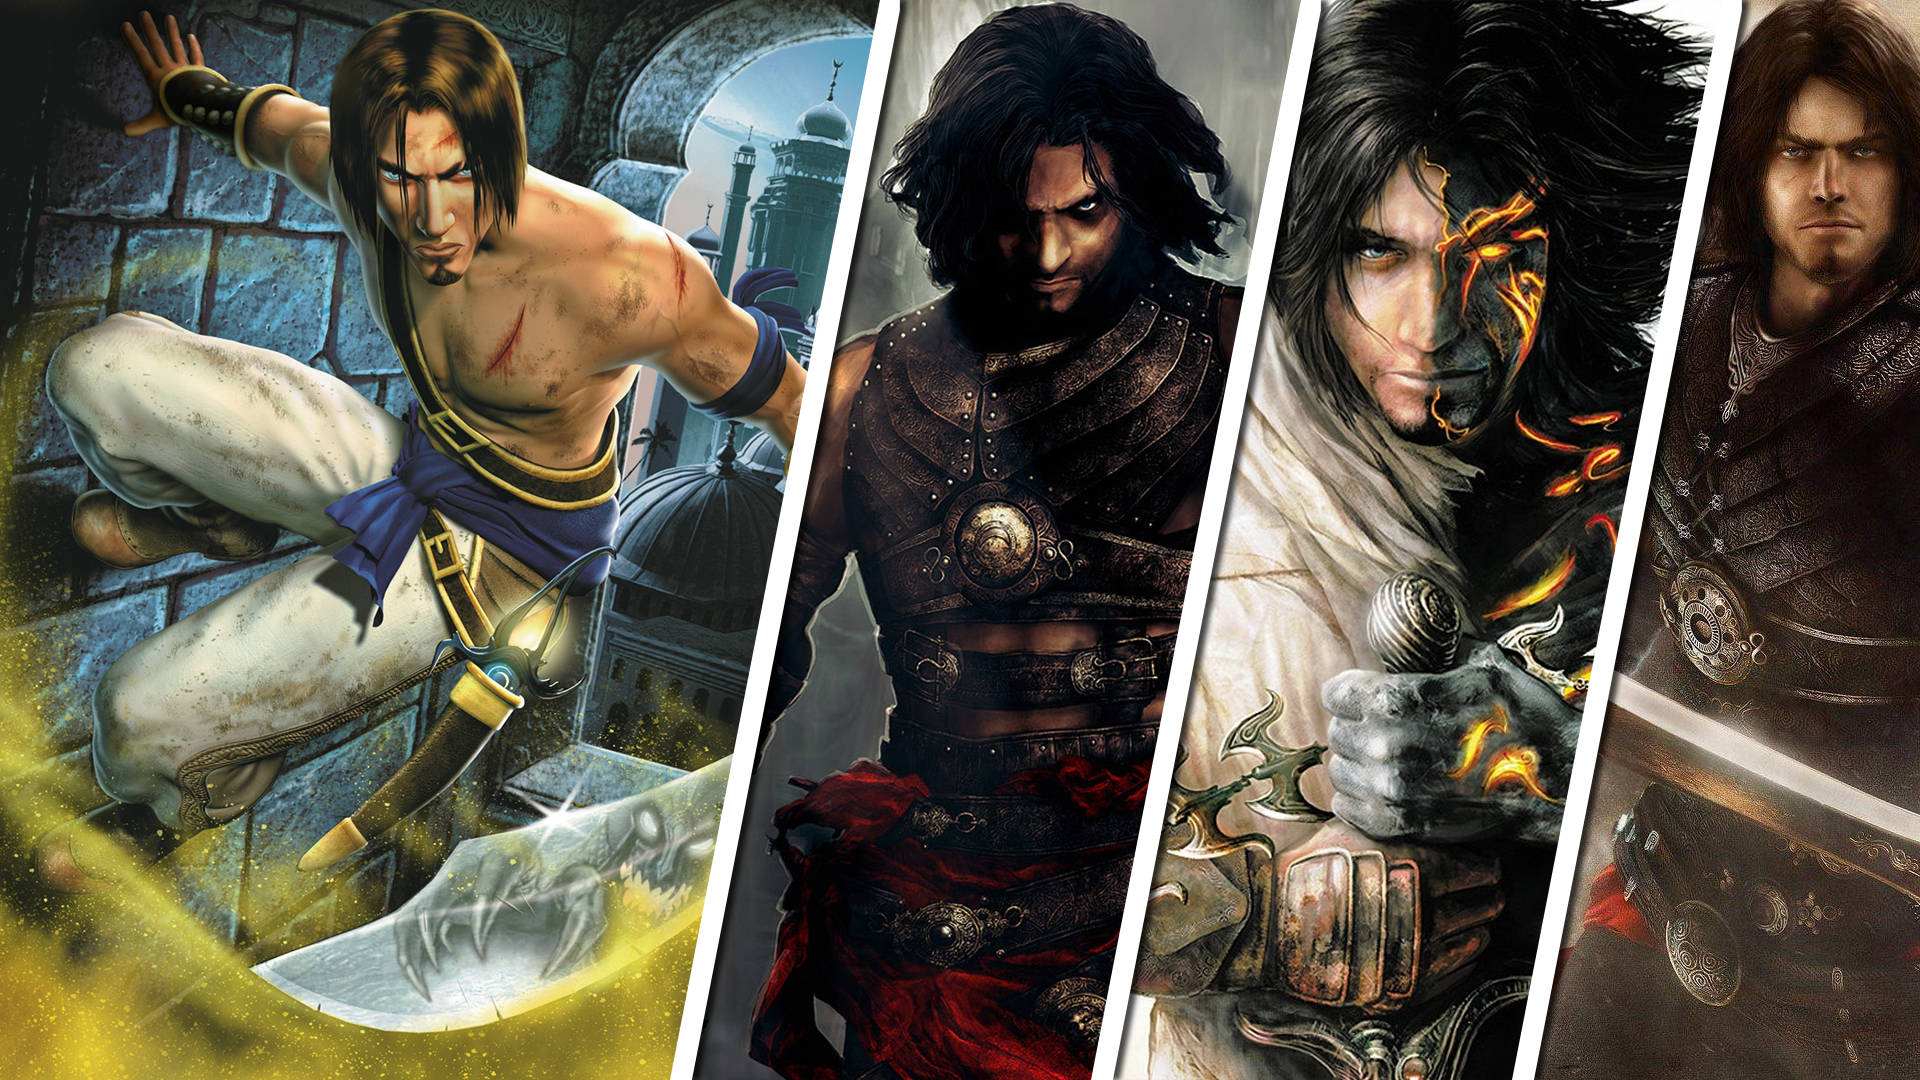 Free Prince Of Persia Wallpaper Downloads, [100+] Prince Of Persia  Wallpapers for FREE 